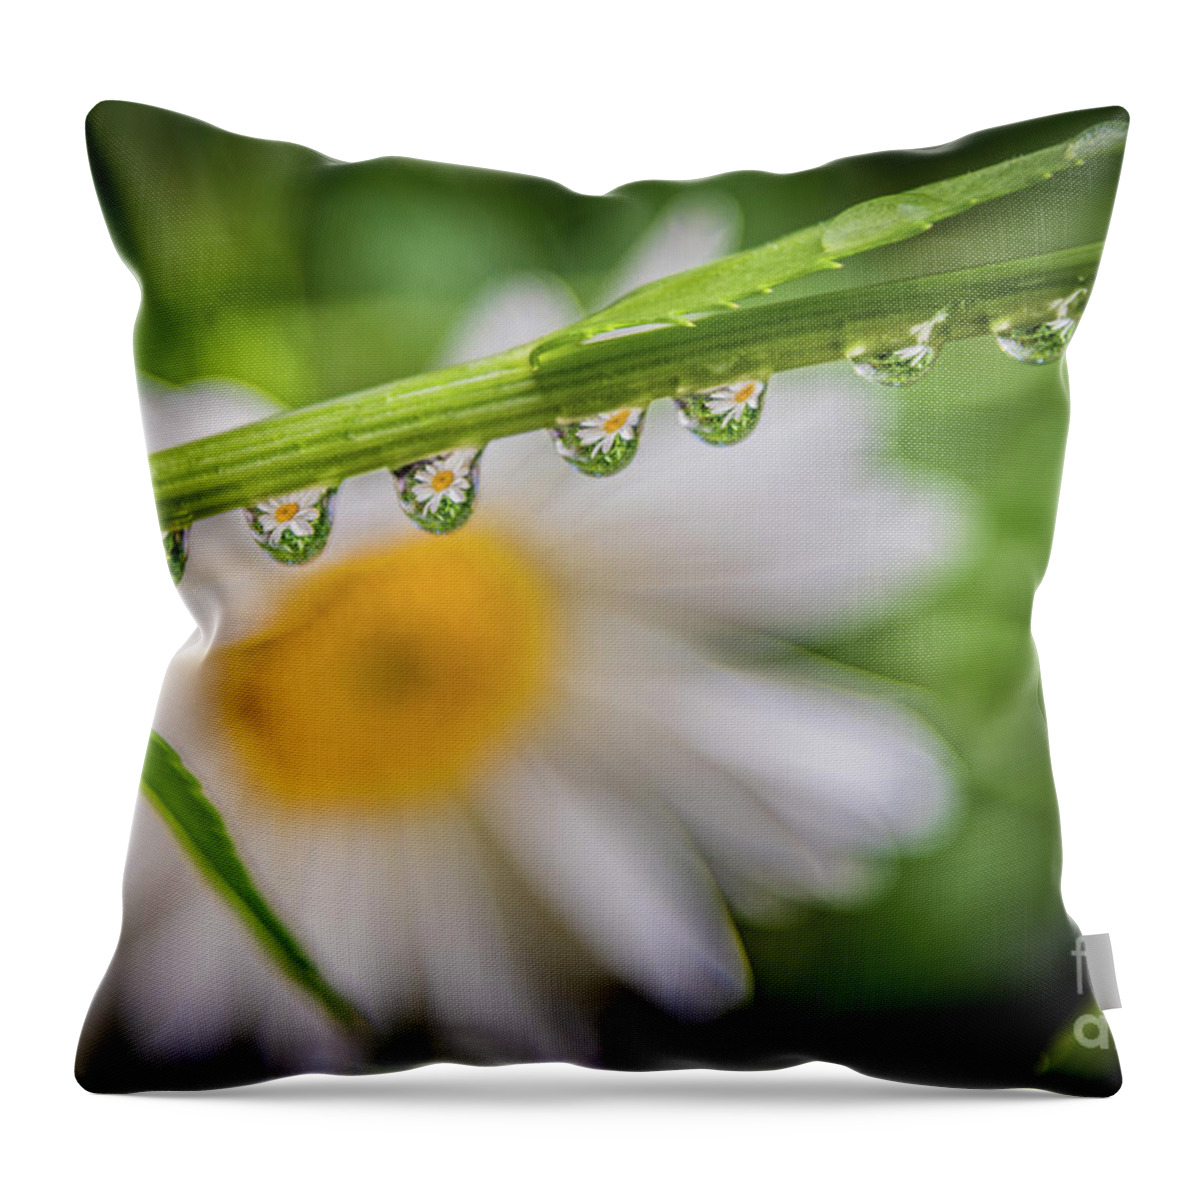 Daisy Chain Throw Pillow featuring the photograph The Daisy Chain by Melissa Lipton